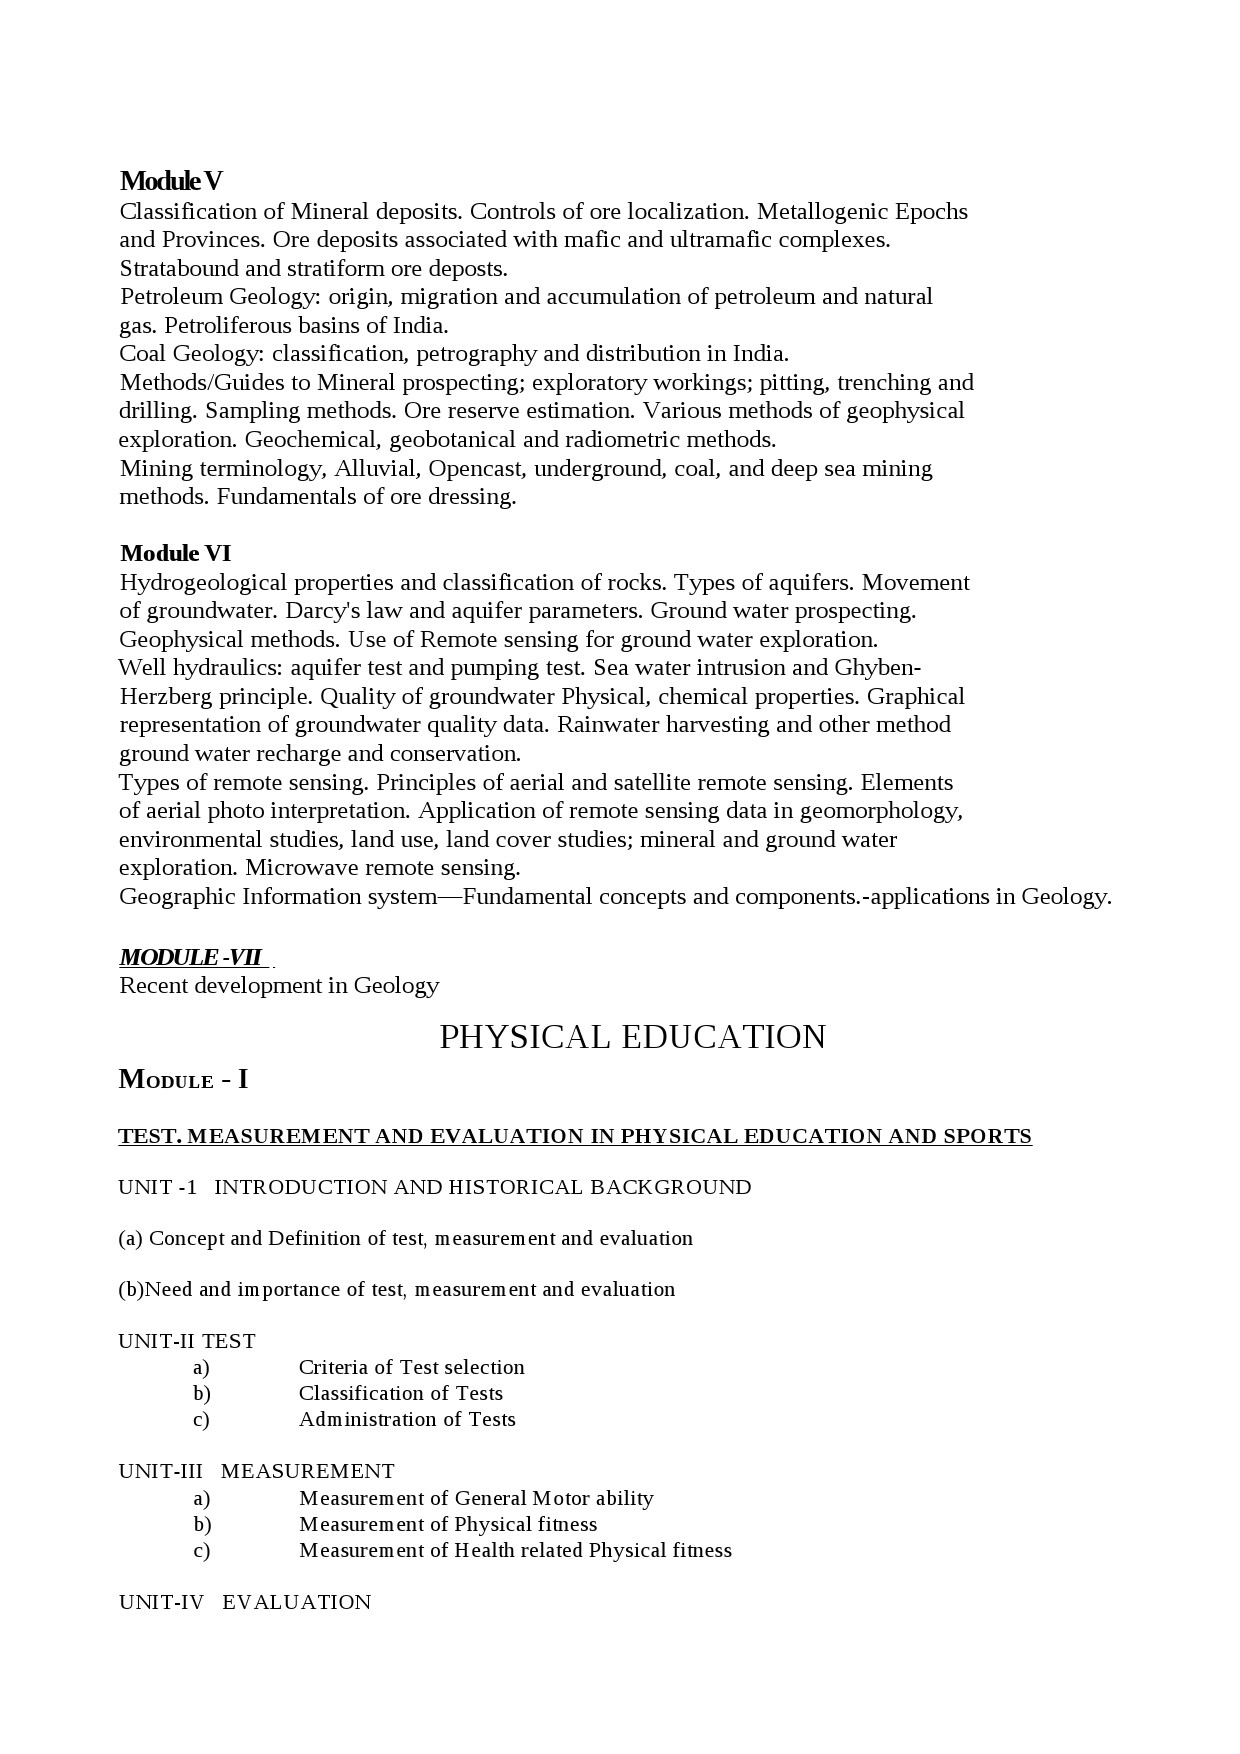 Science Syllabus for Kerala PSC 2021 Exam - Notification Image 26